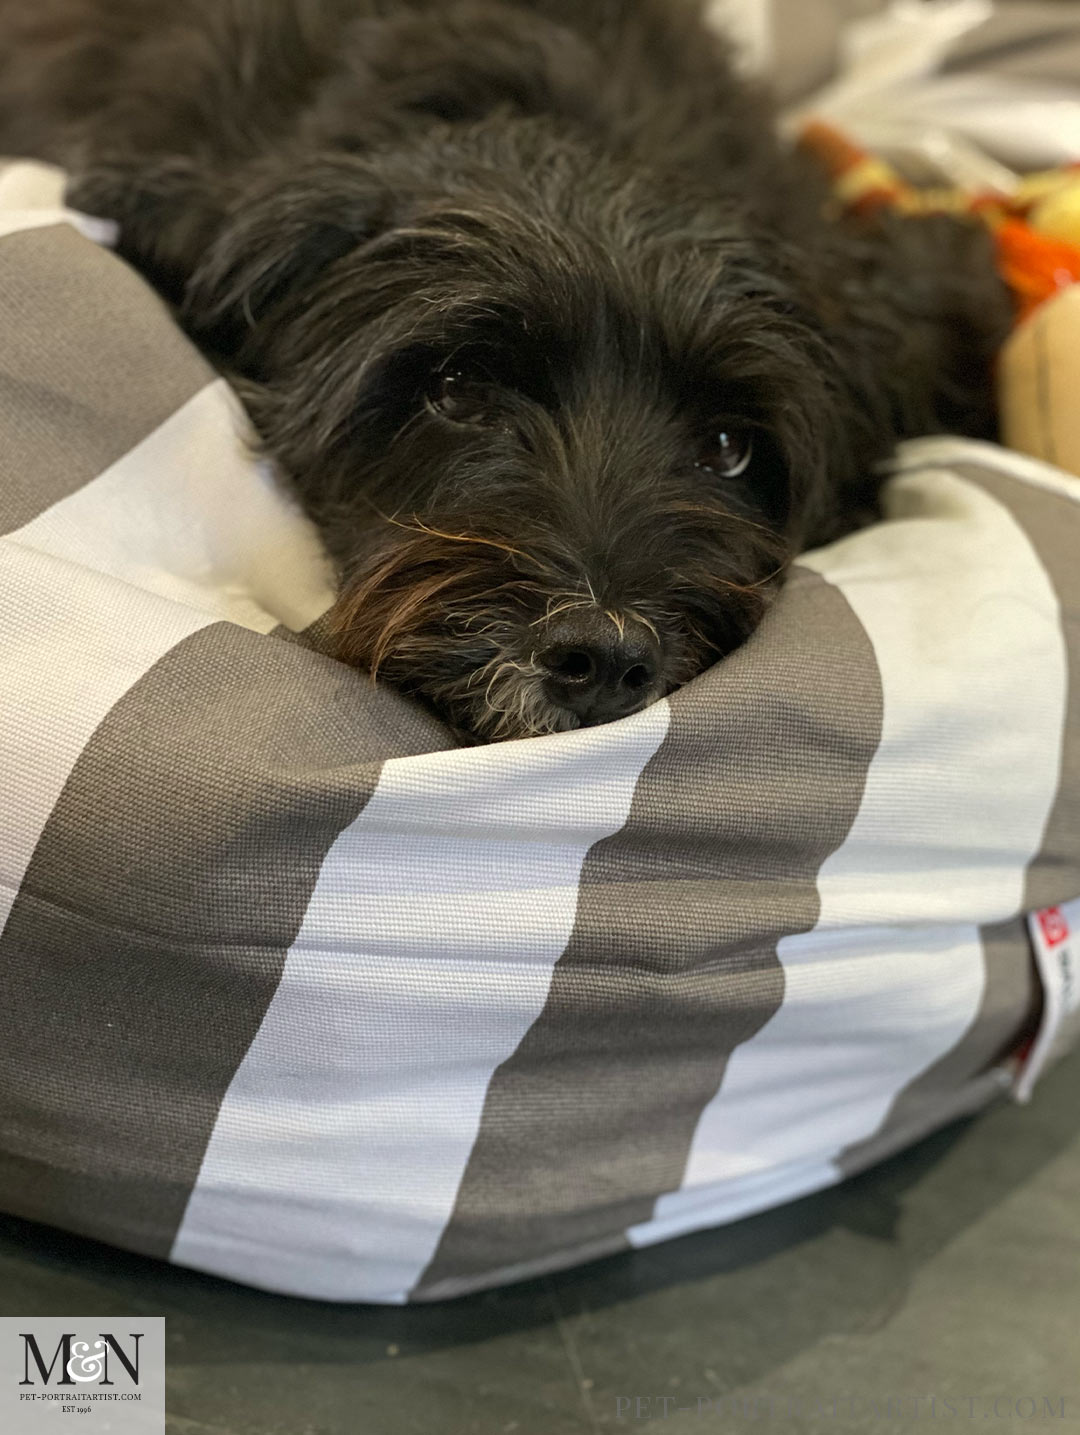 Lily on her beanbag - Melanie's September Monthly News